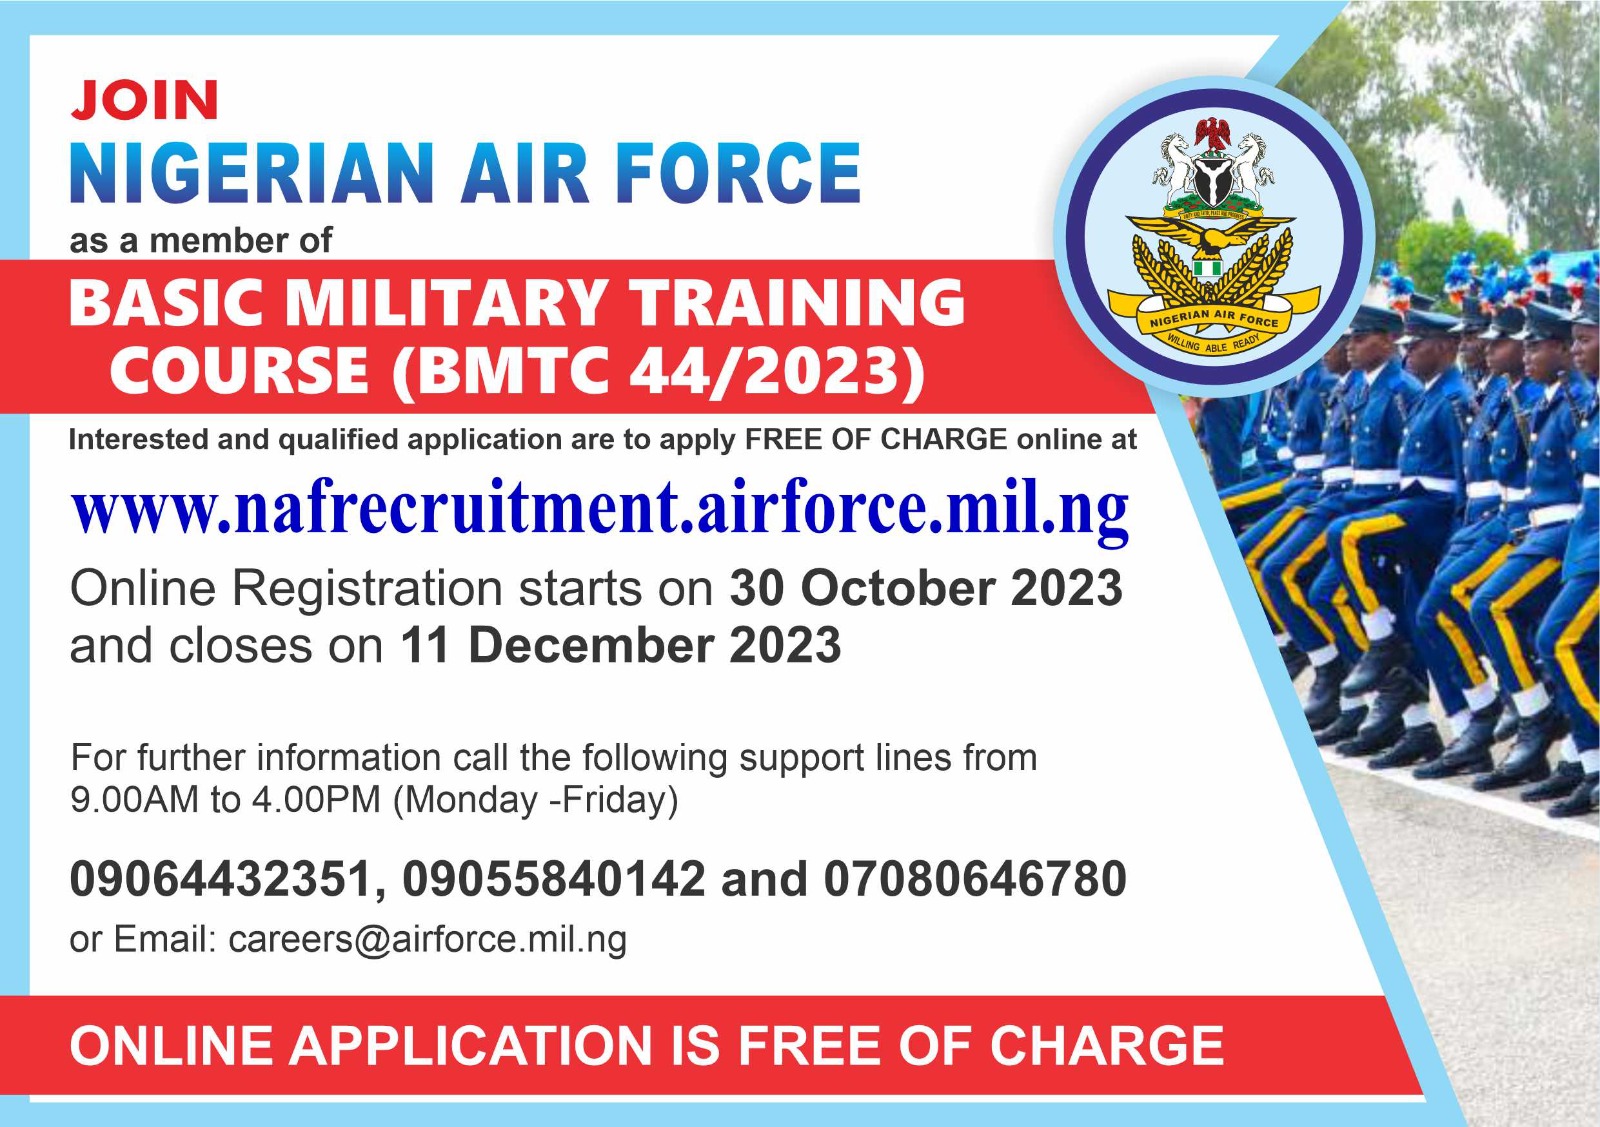 Nigerian Air Force Recruitment 2023: Basic Military Training Course (BMTC 44/2023)